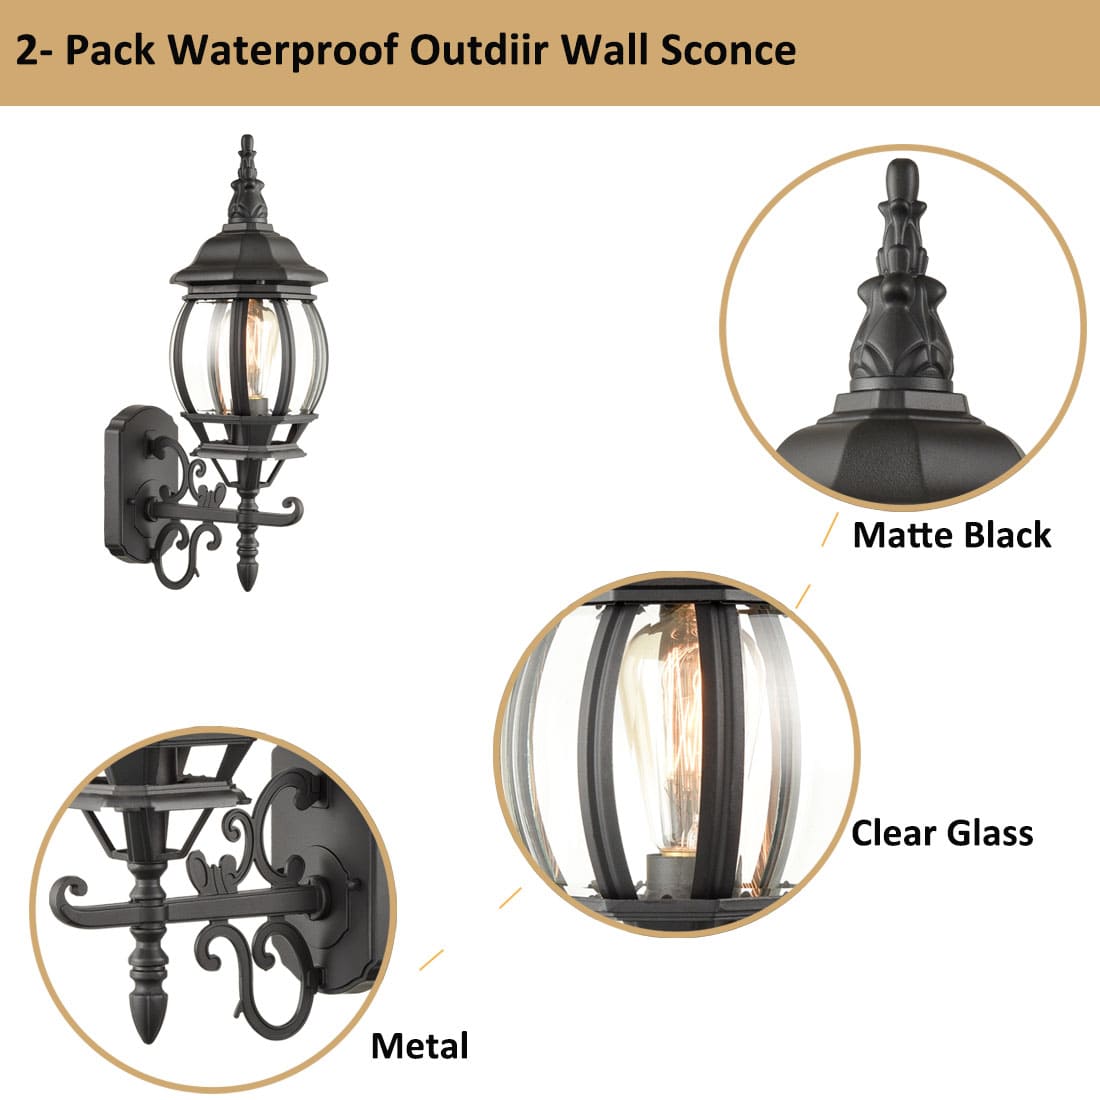 2-Pack Industrial Wall Light Waterproof Exterior Sconce Matte Black